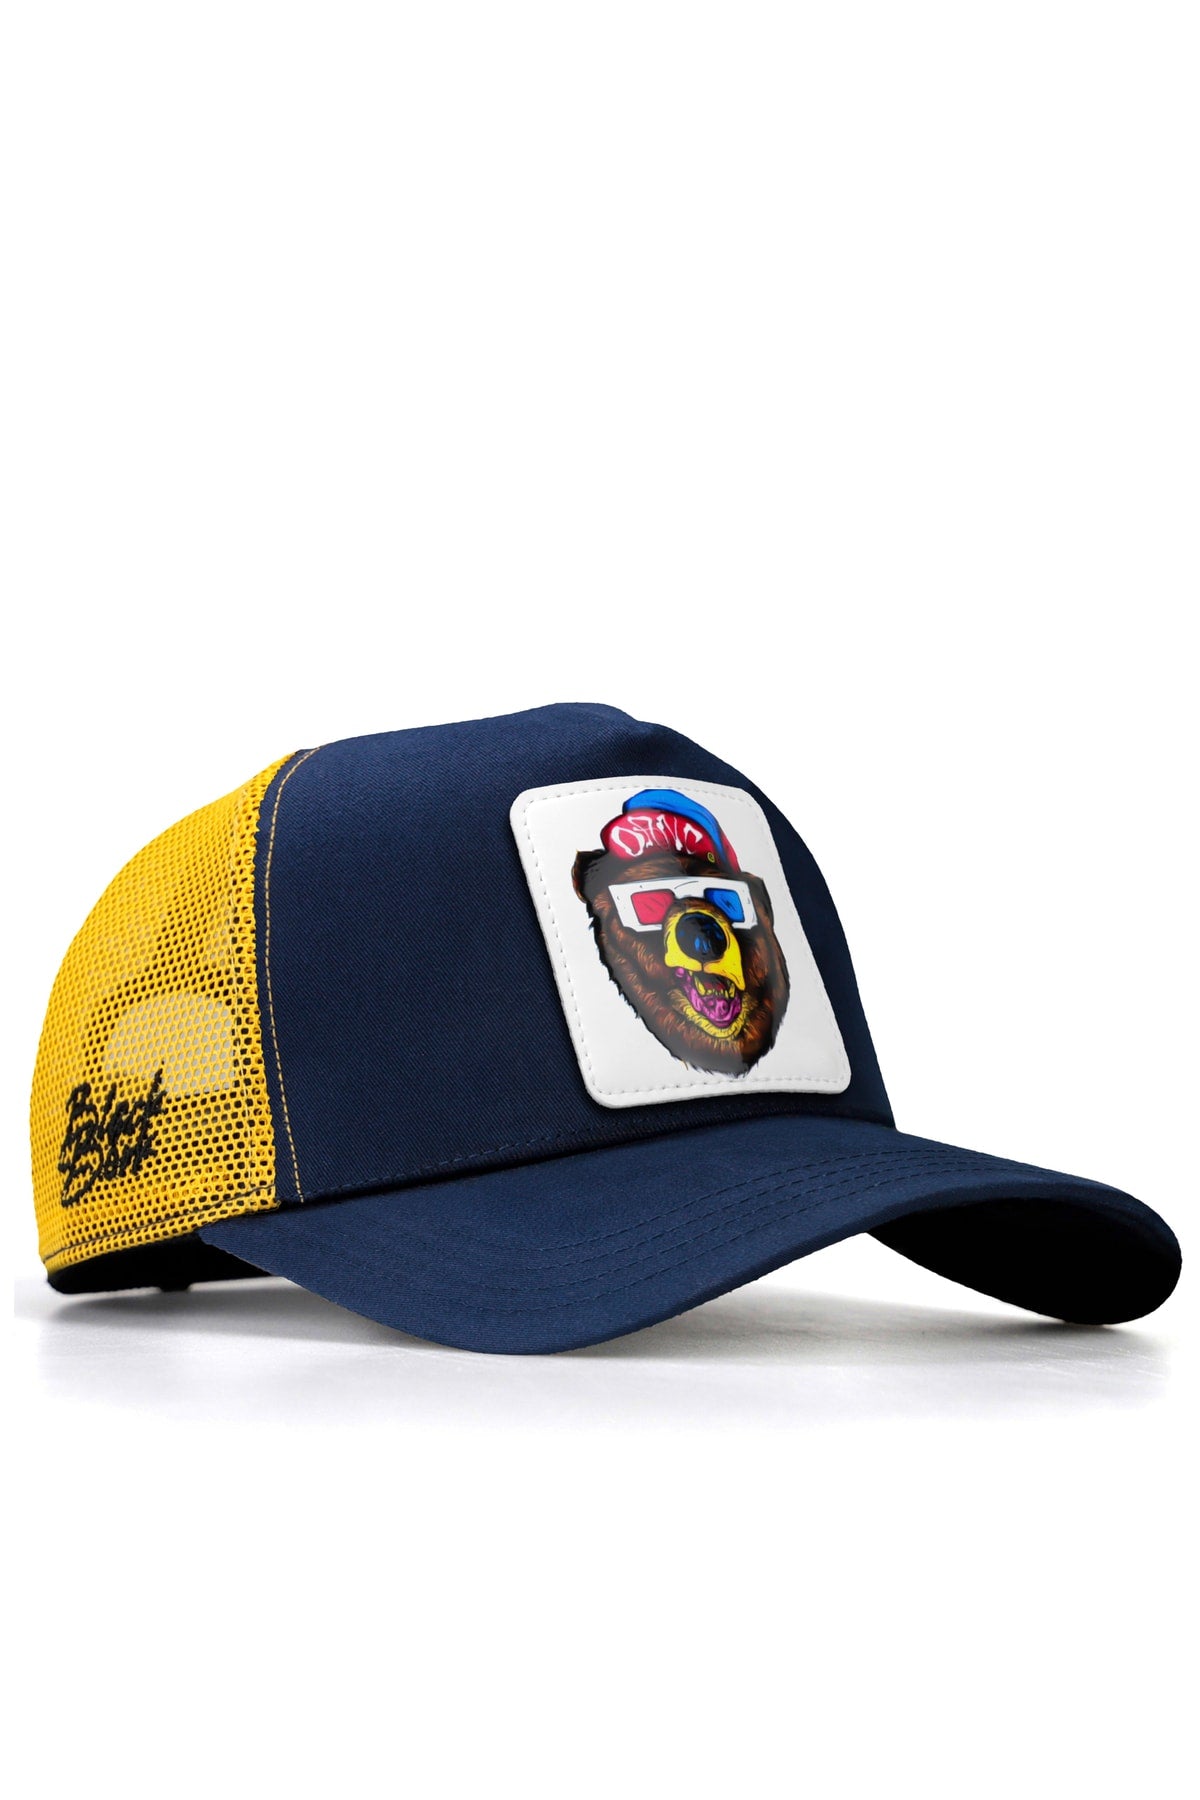 V1 Trucker Dance Bear - Unisex Navy Blue-Yellow Hat (Cap) with 5 Code Logo